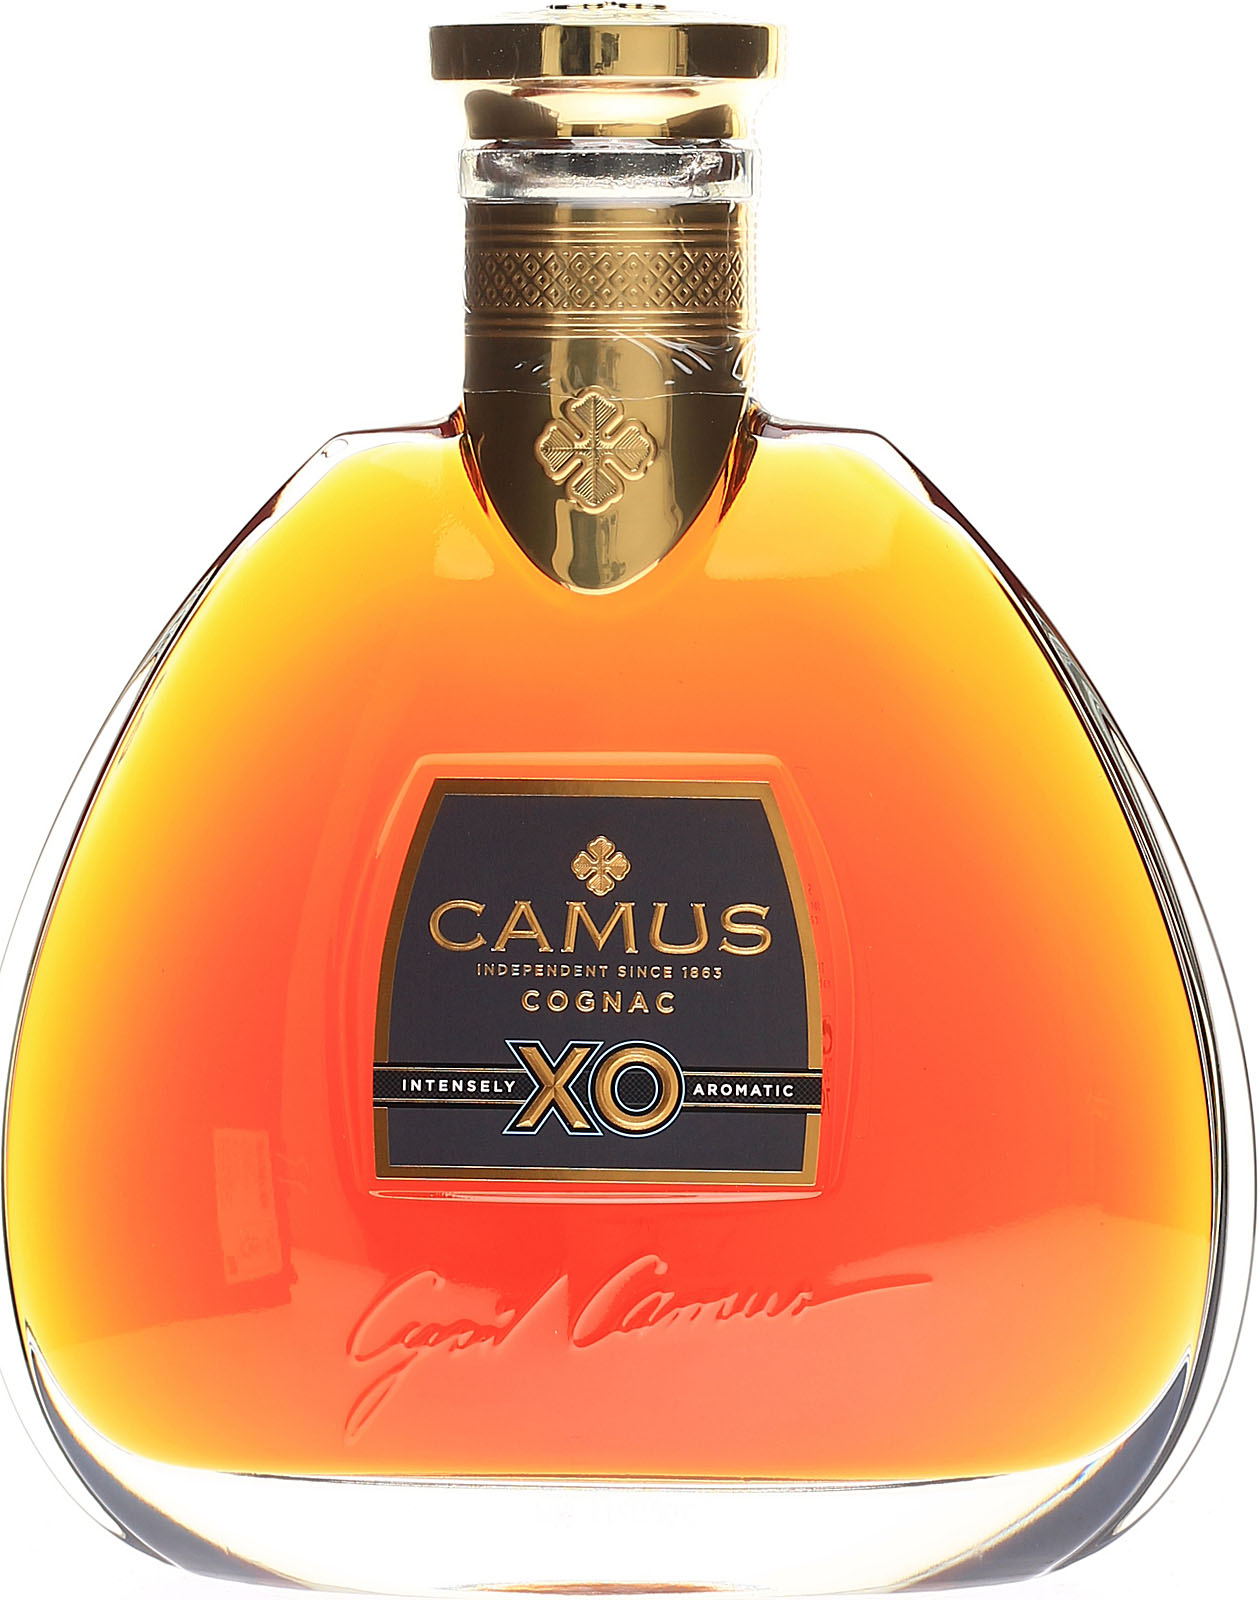 Buy camus xo elegance cognac online with hushhush's price promise. 